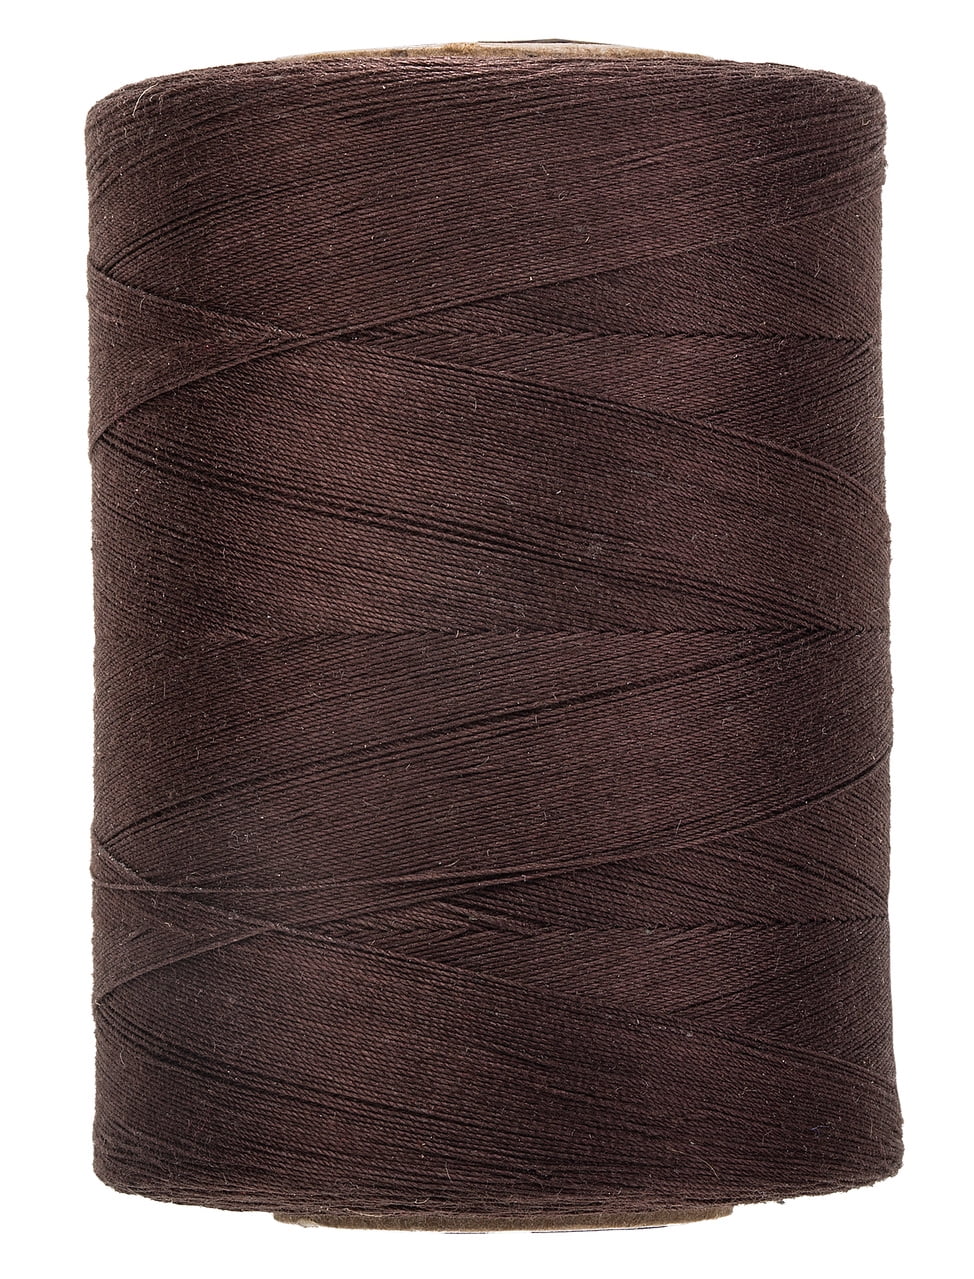 Gütermann Cotton 12wt Thread 200m - Dark Tan 1120